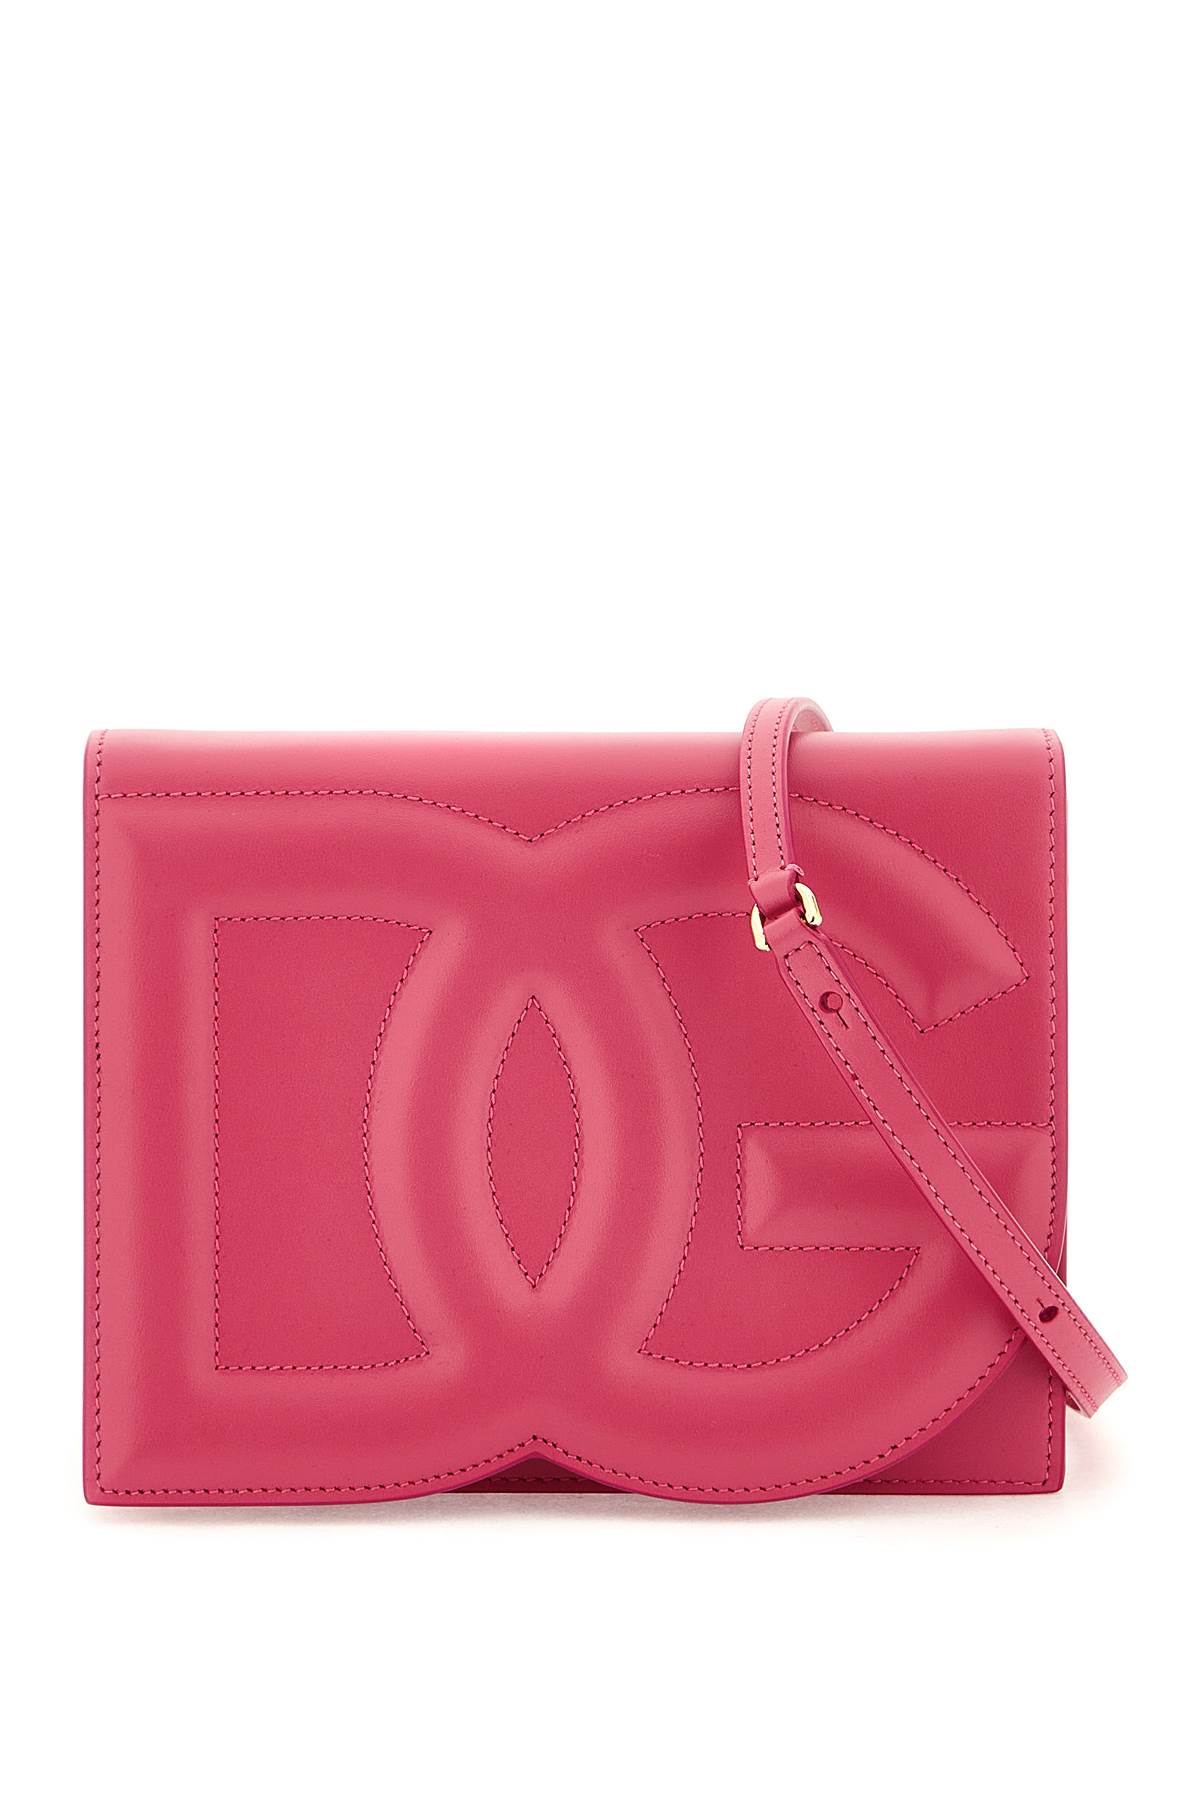 Dolce & Gabbana Dg Logo Crossbody Bag